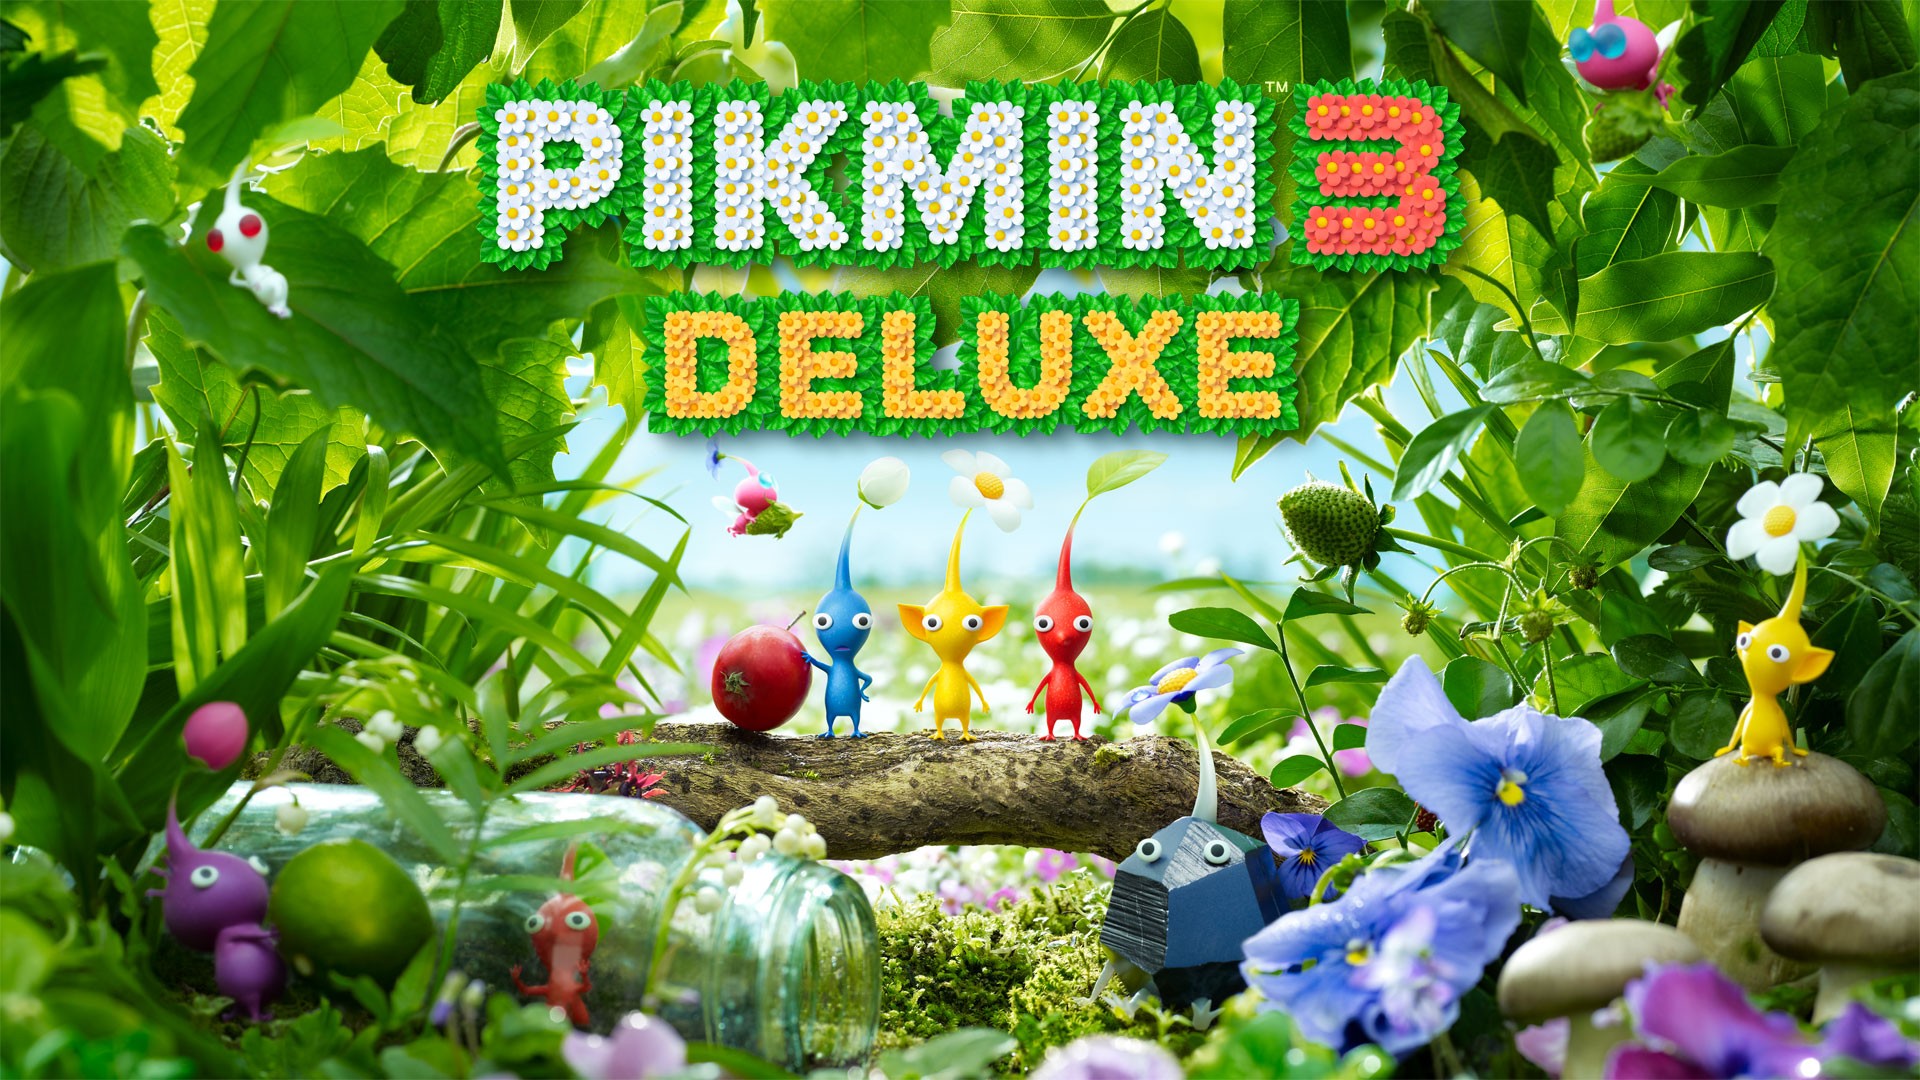 Pikmin 3 Deluxe, Jogos para a Nintendo Switch, Jogos